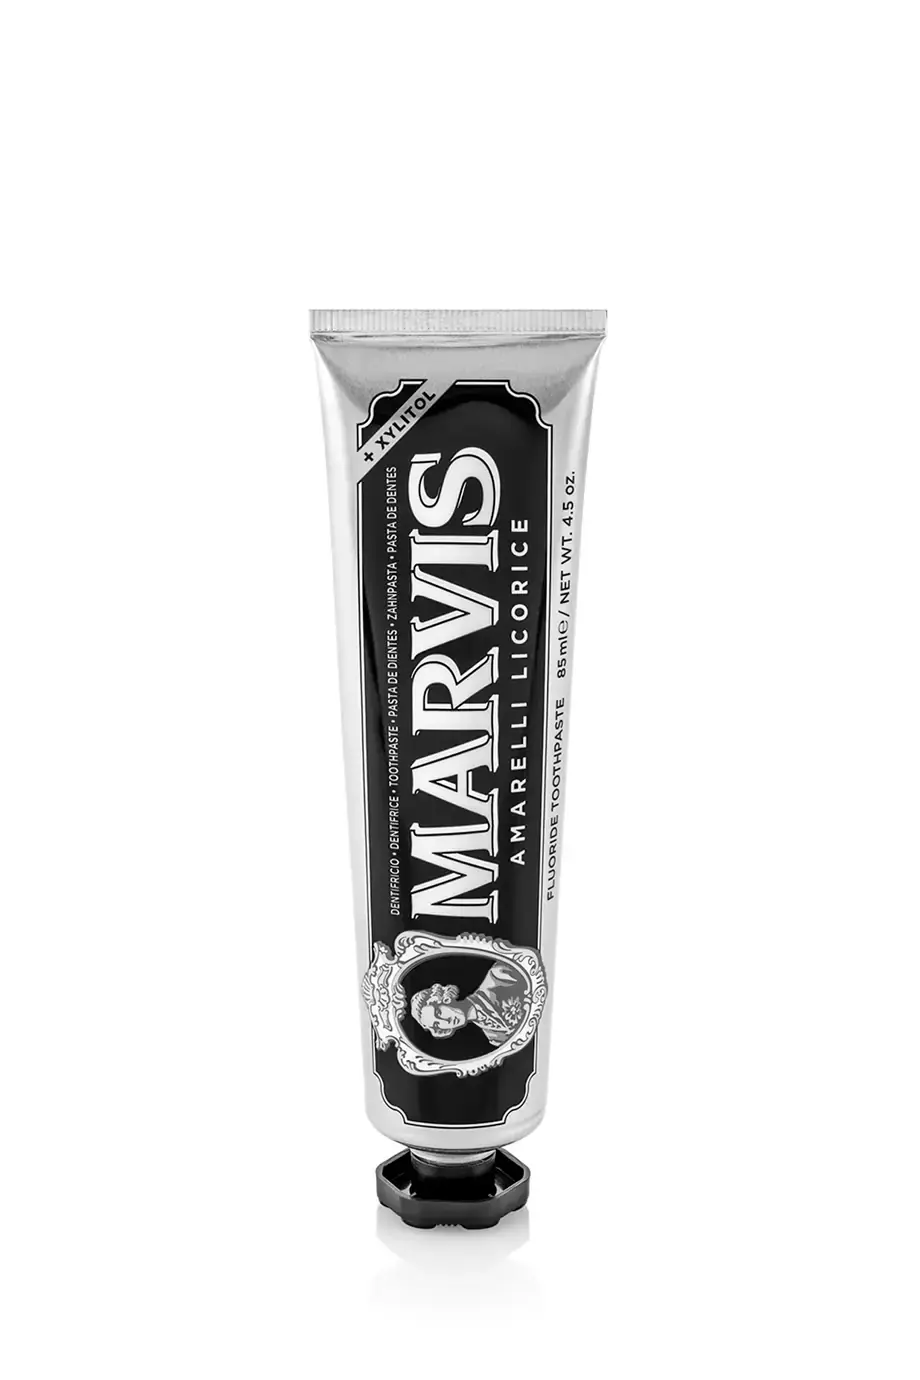 Marvis Amarelli Licorice Toothpaste